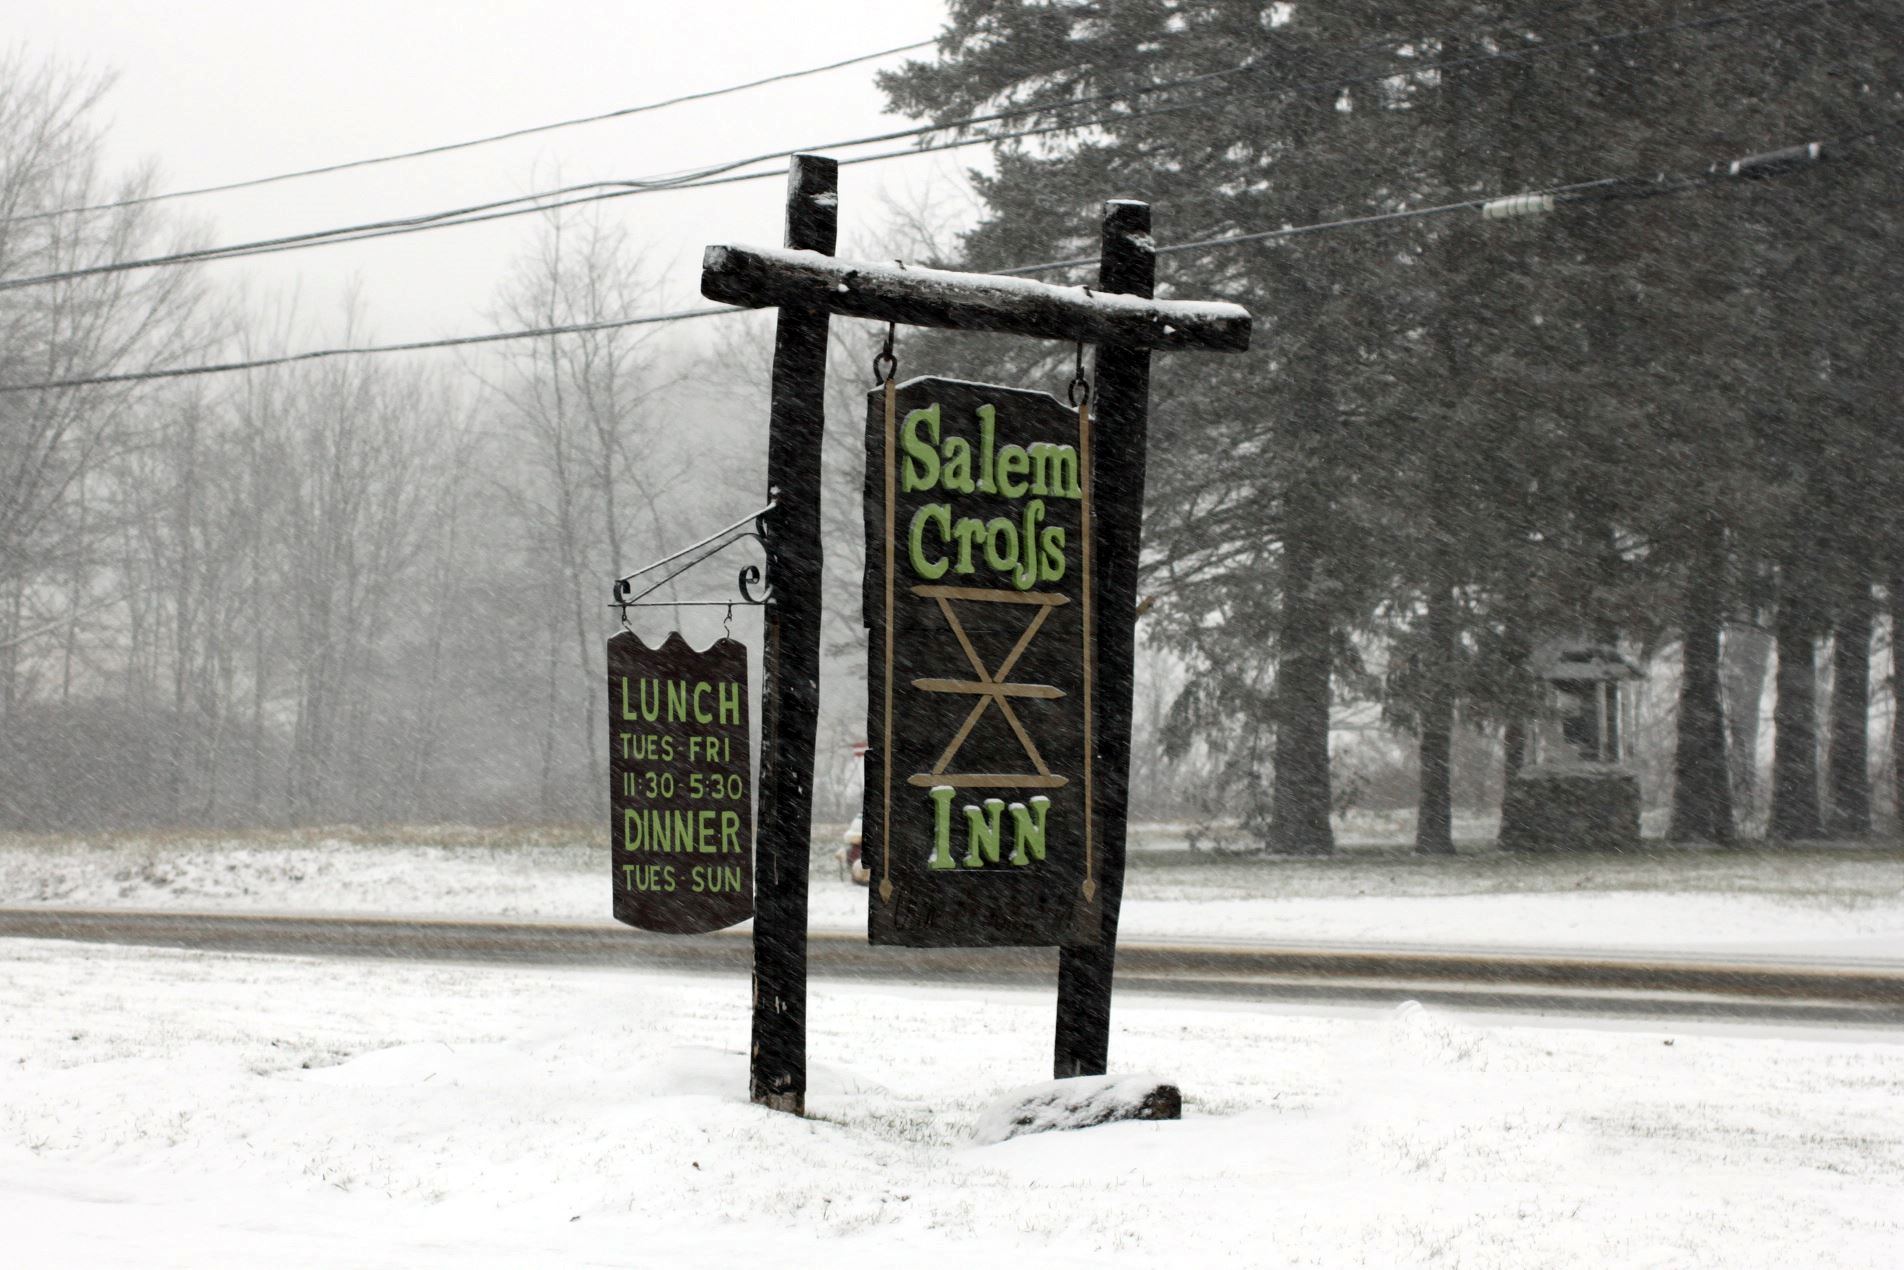 Salem Cross Inn - 7